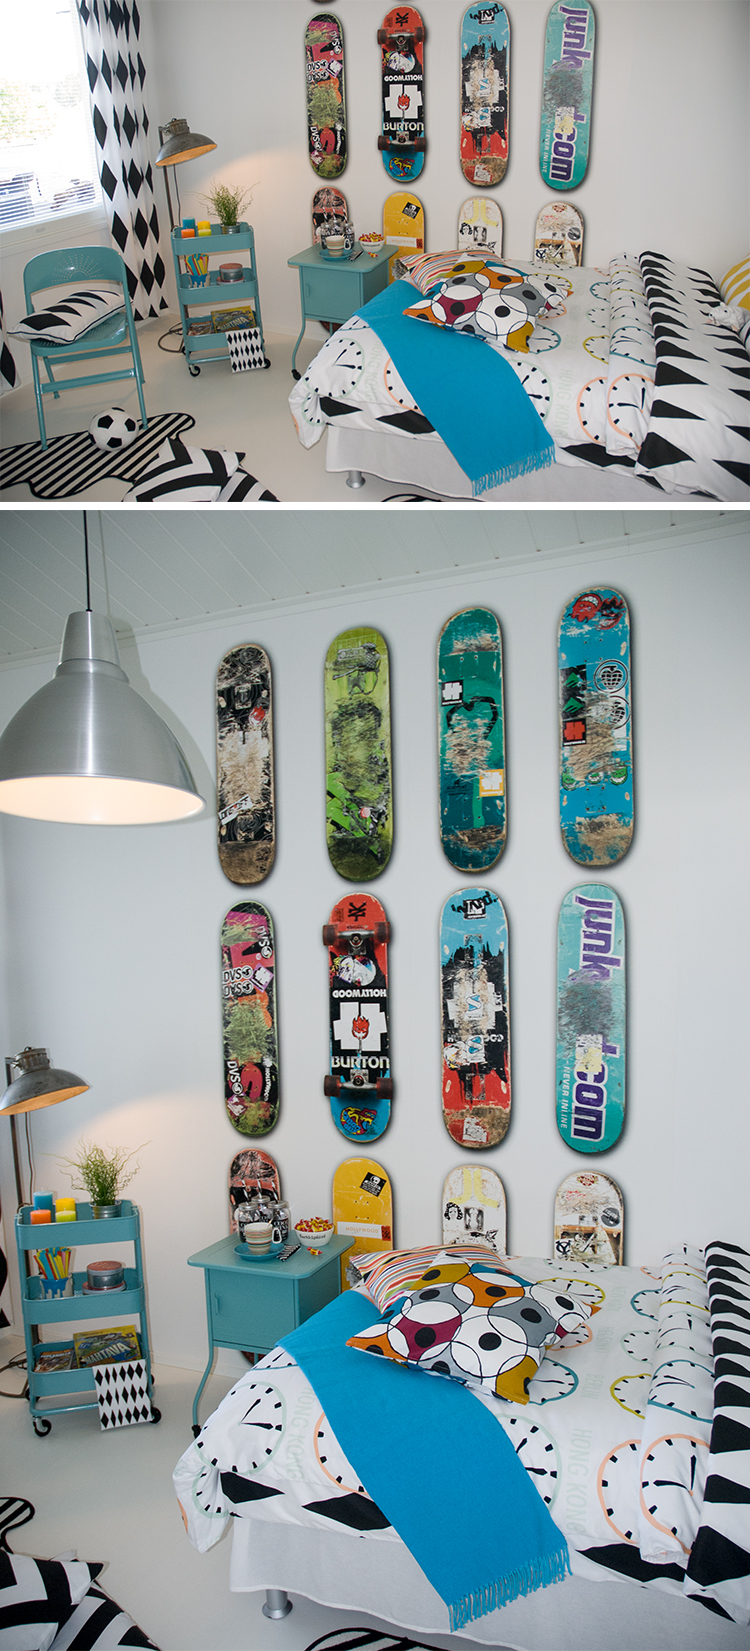 Coolt tonårsrum med skateboards på tapeten